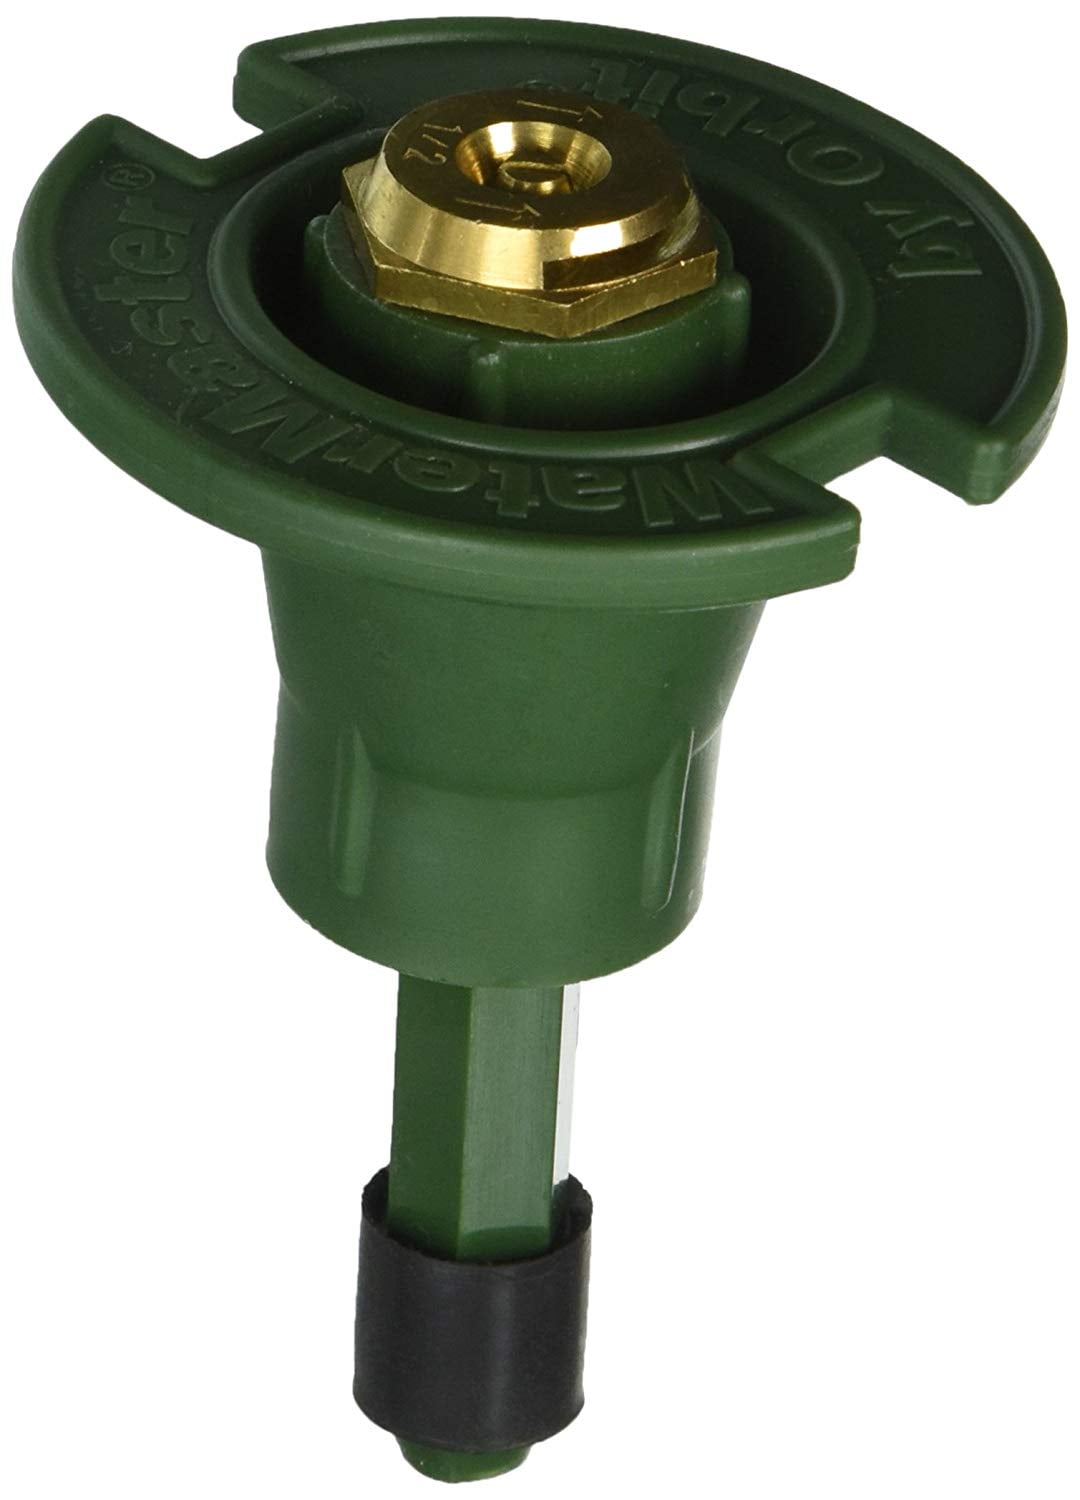 Details about    Champion 18SH Brass 1-1/2" Half Circle Pop Up Lawn Sprinkler Heads 18 